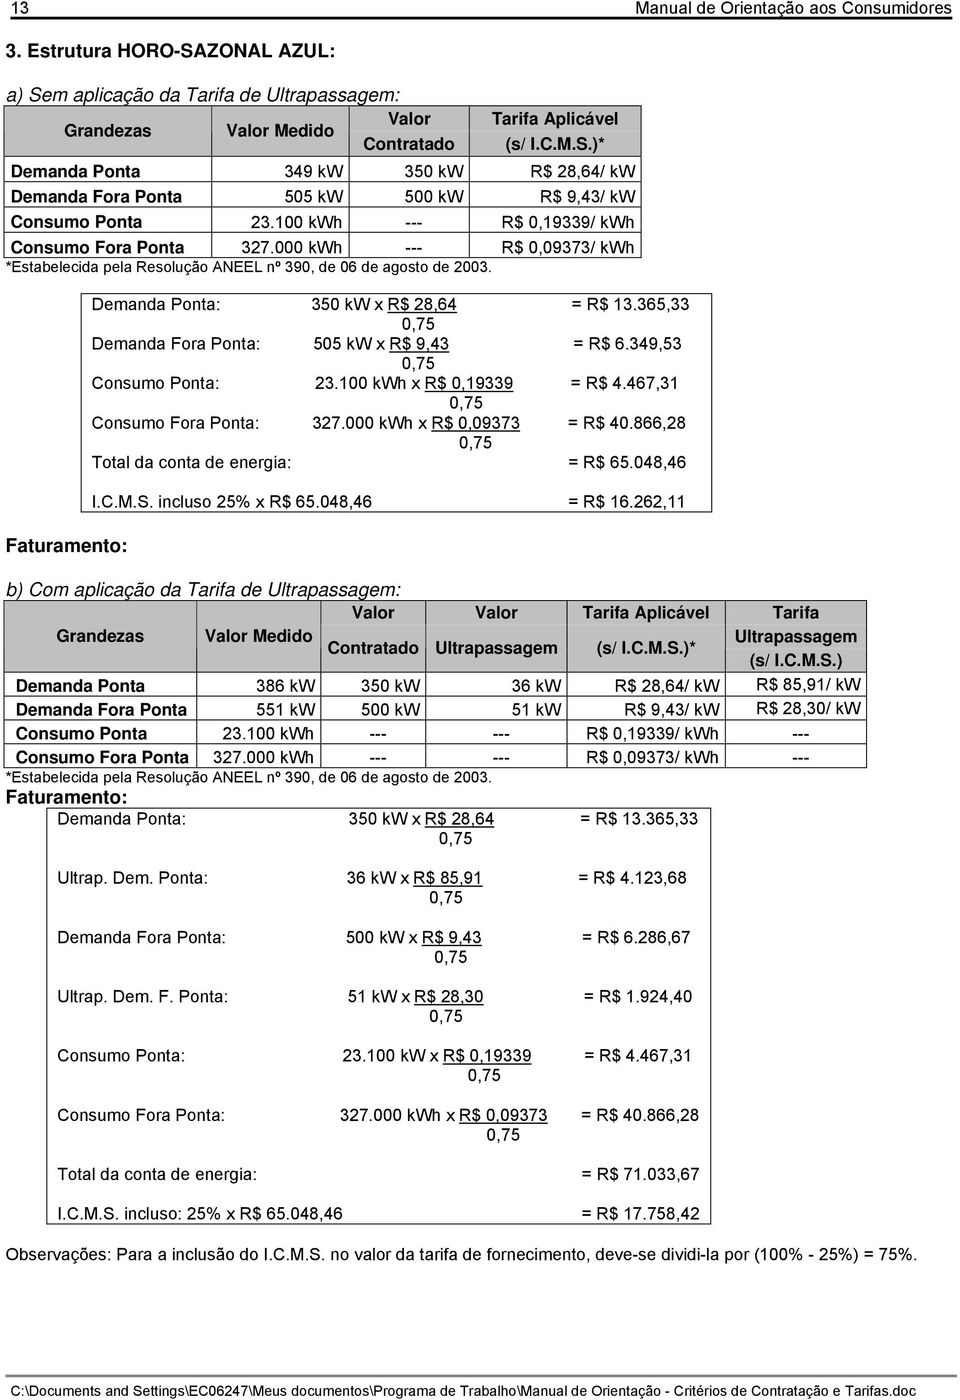 Faturamento: Demanda Ponta: 350 kw x R$ 28,64 = R$ 13.365,33 Demanda Fora Ponta: 505 kw x R$ 9,43 = R$ 6.349,53 Consumo Ponta: 23.100 kwh x R$ 0,19339 = R$ 4.467,31 Consumo Fora Ponta: 327.